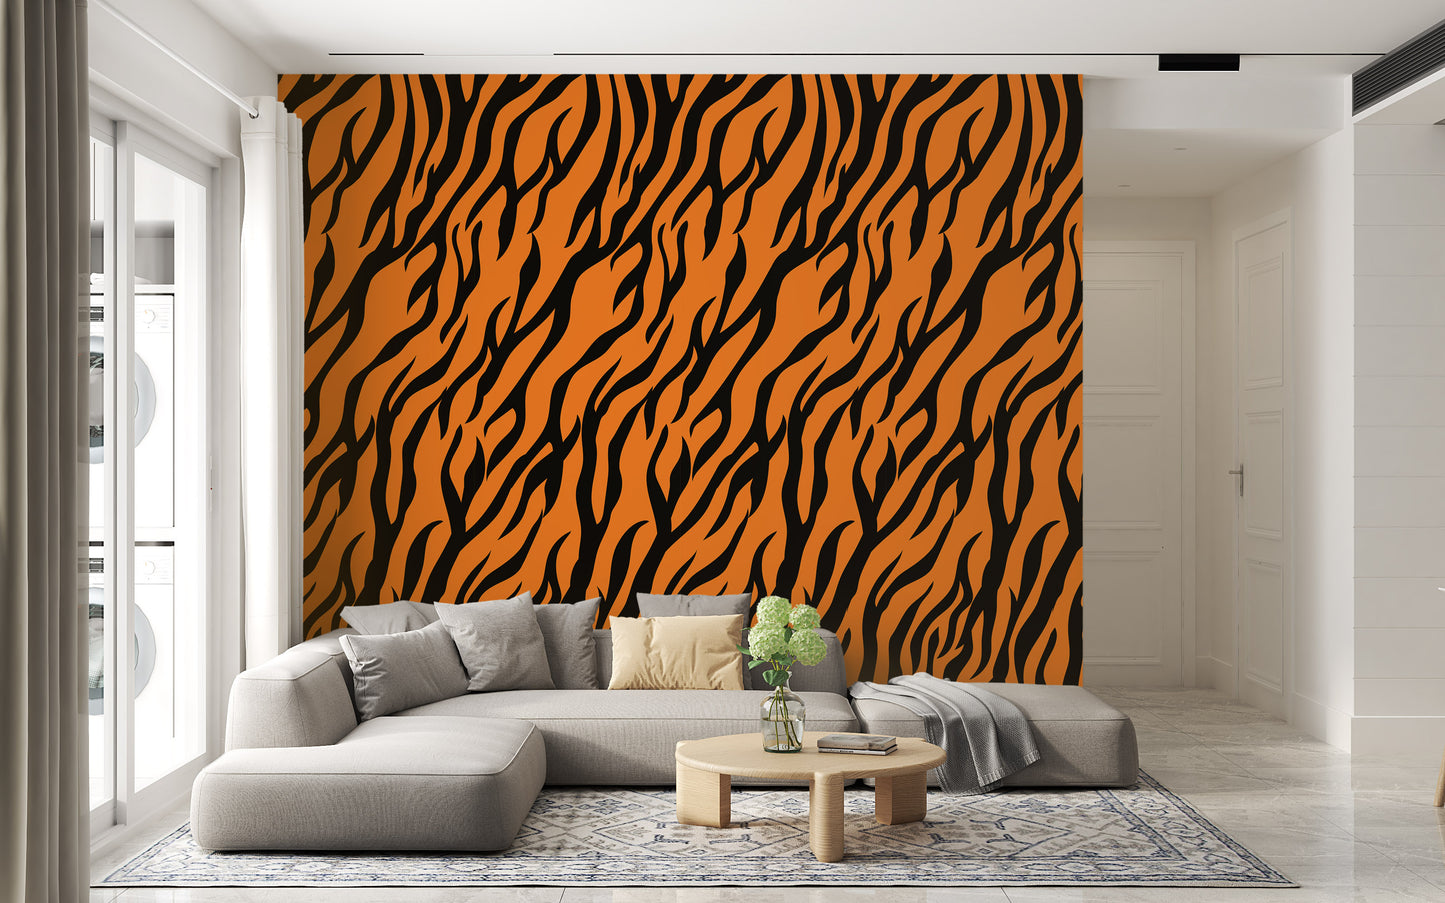 tiger-skin animal-print fashion collection background zoo safari seamless pet pattern background